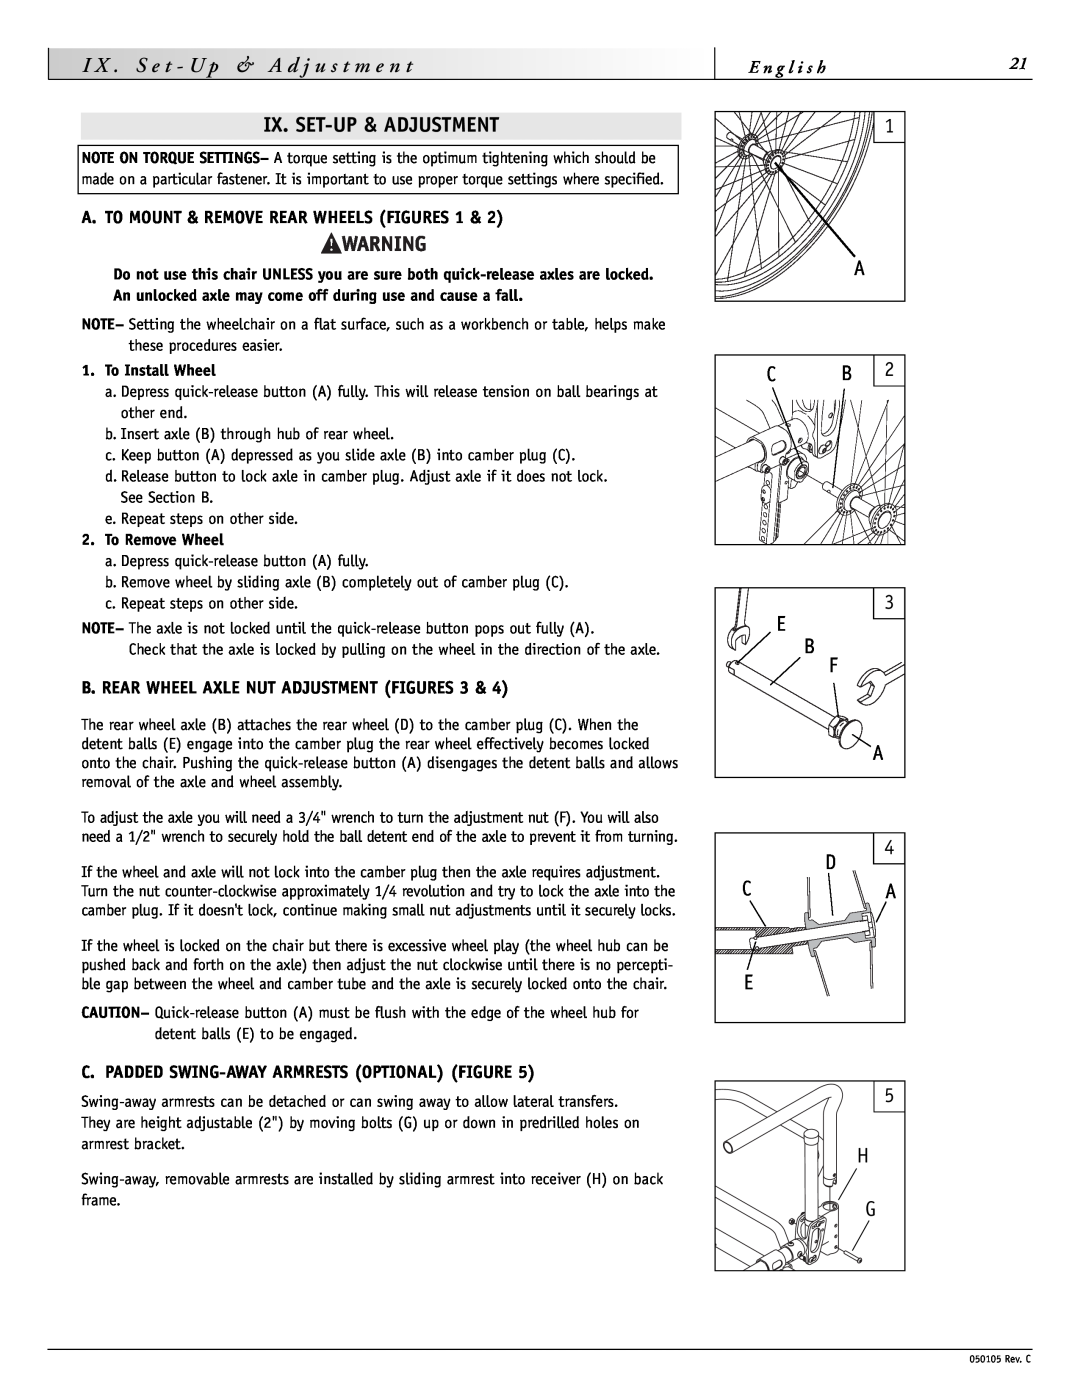 Sunrise Medical GT instruction manual Ix. Set-Up & Adjustment, I X . S e t - U p 